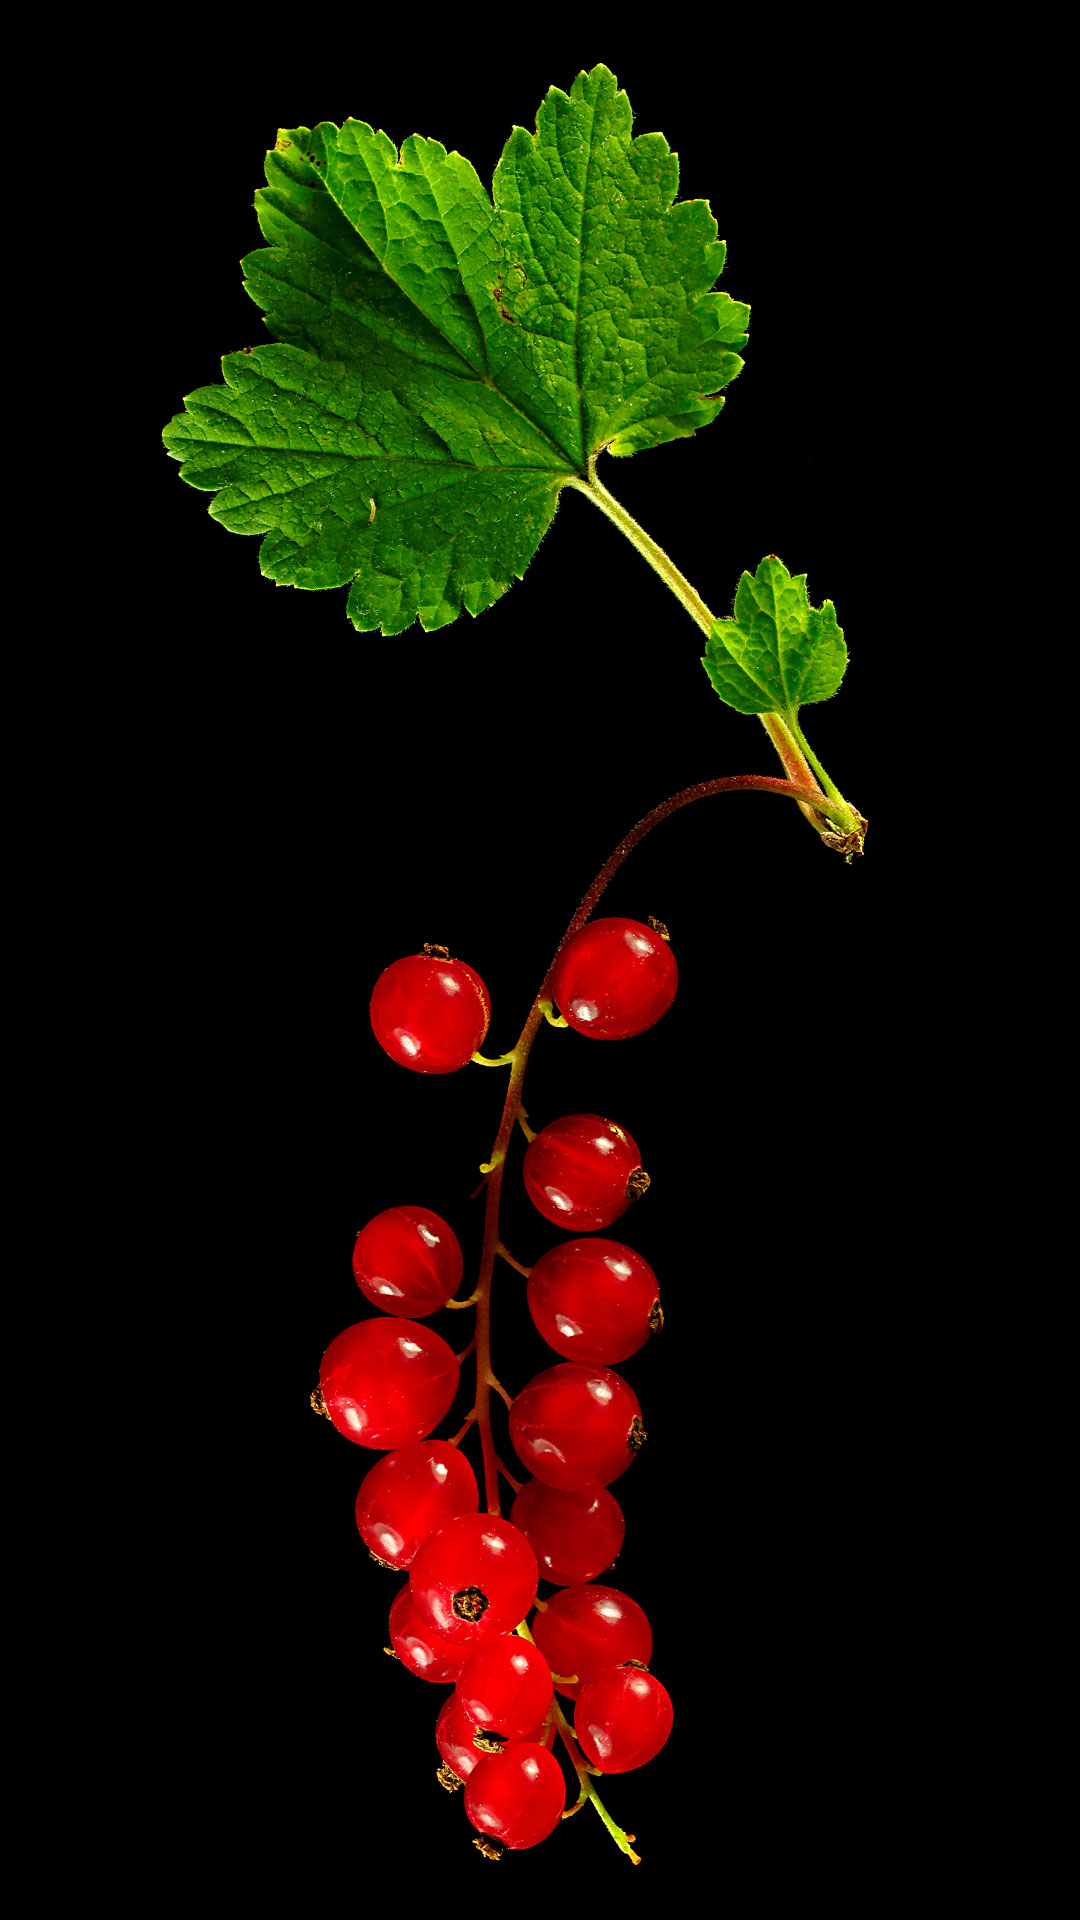 Redcurrant: Ribes rubrum